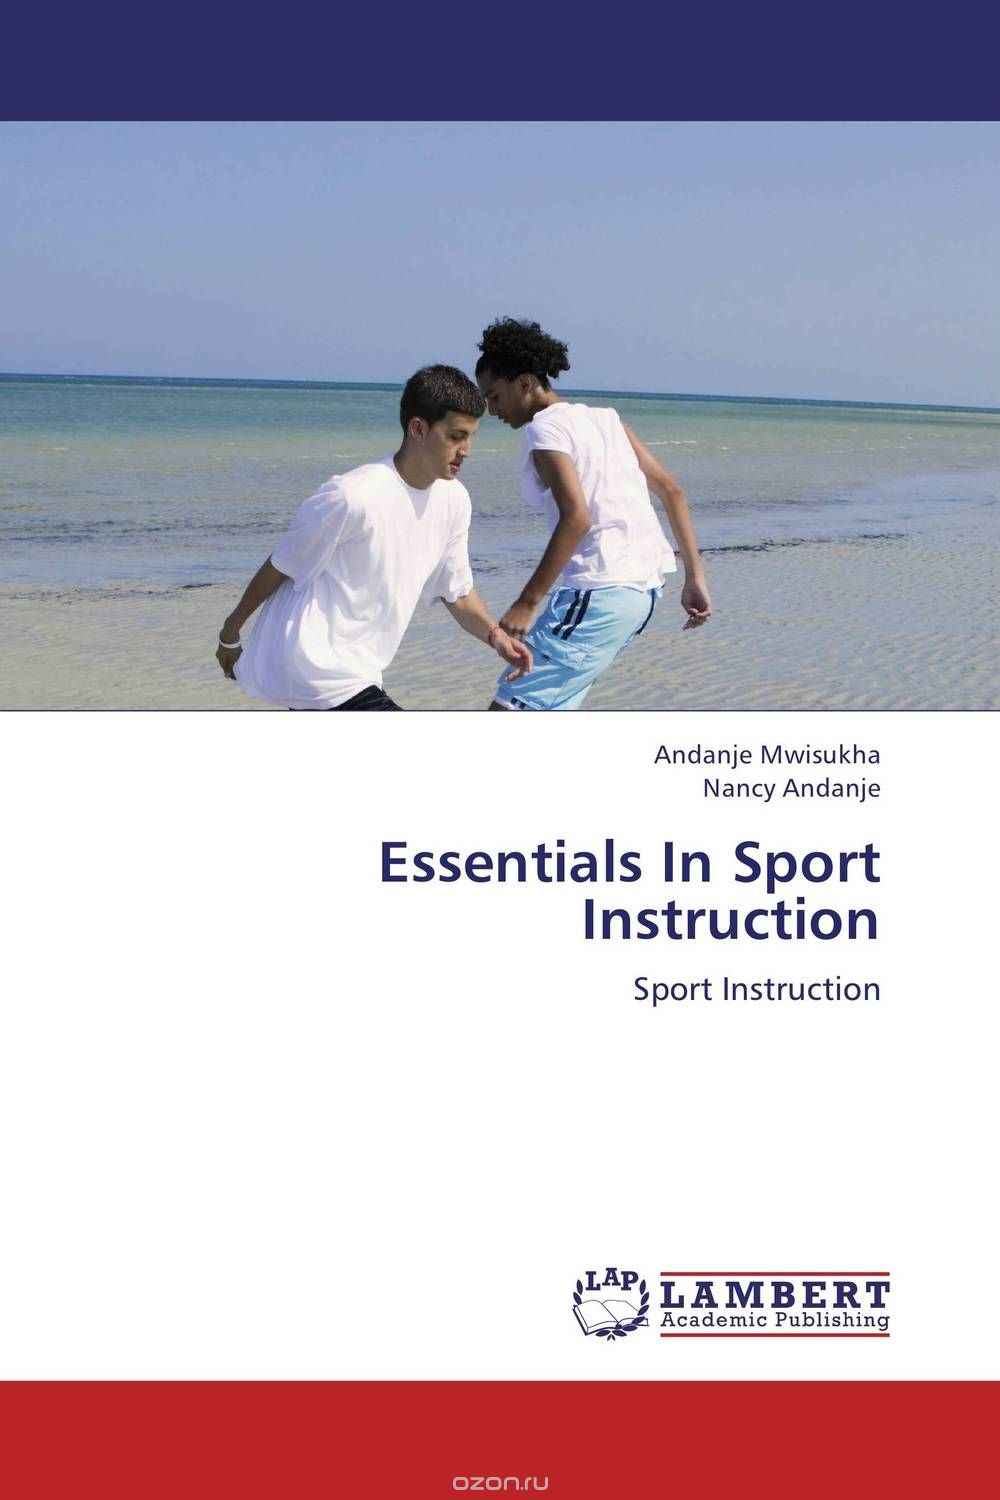 Скачать книгу "Essentials In Sport Instruction"